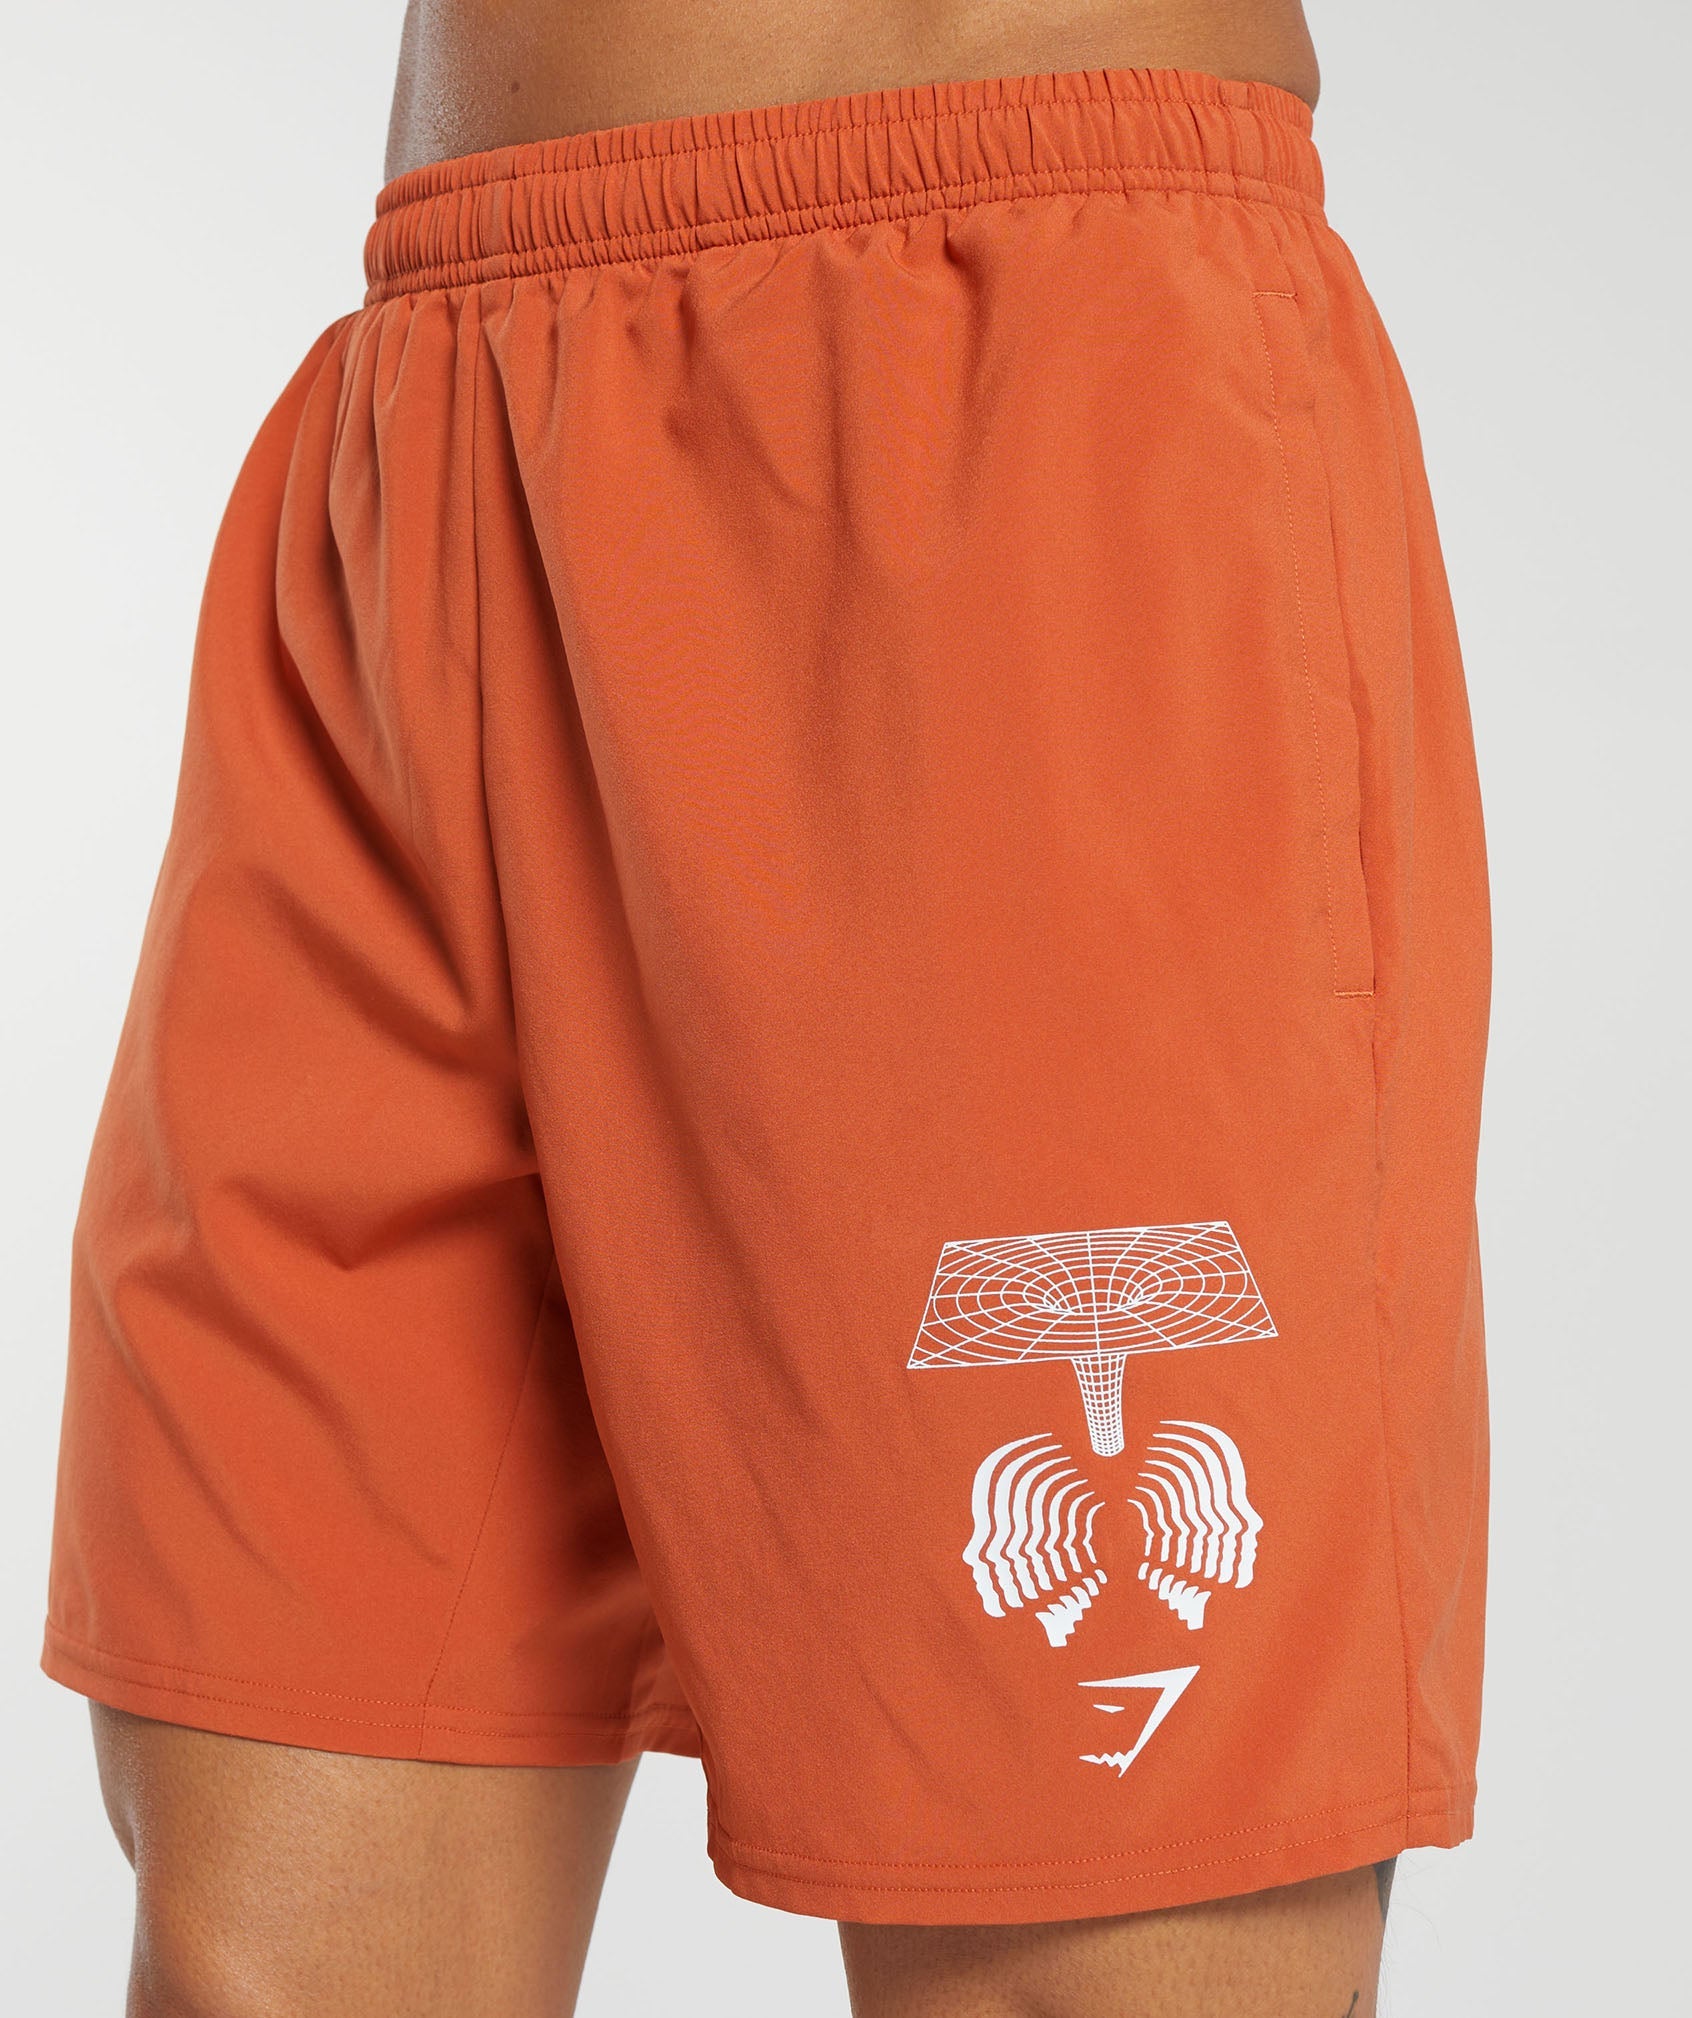 Hybrid Wellness 7" Shorts in Rust Orange - view 5